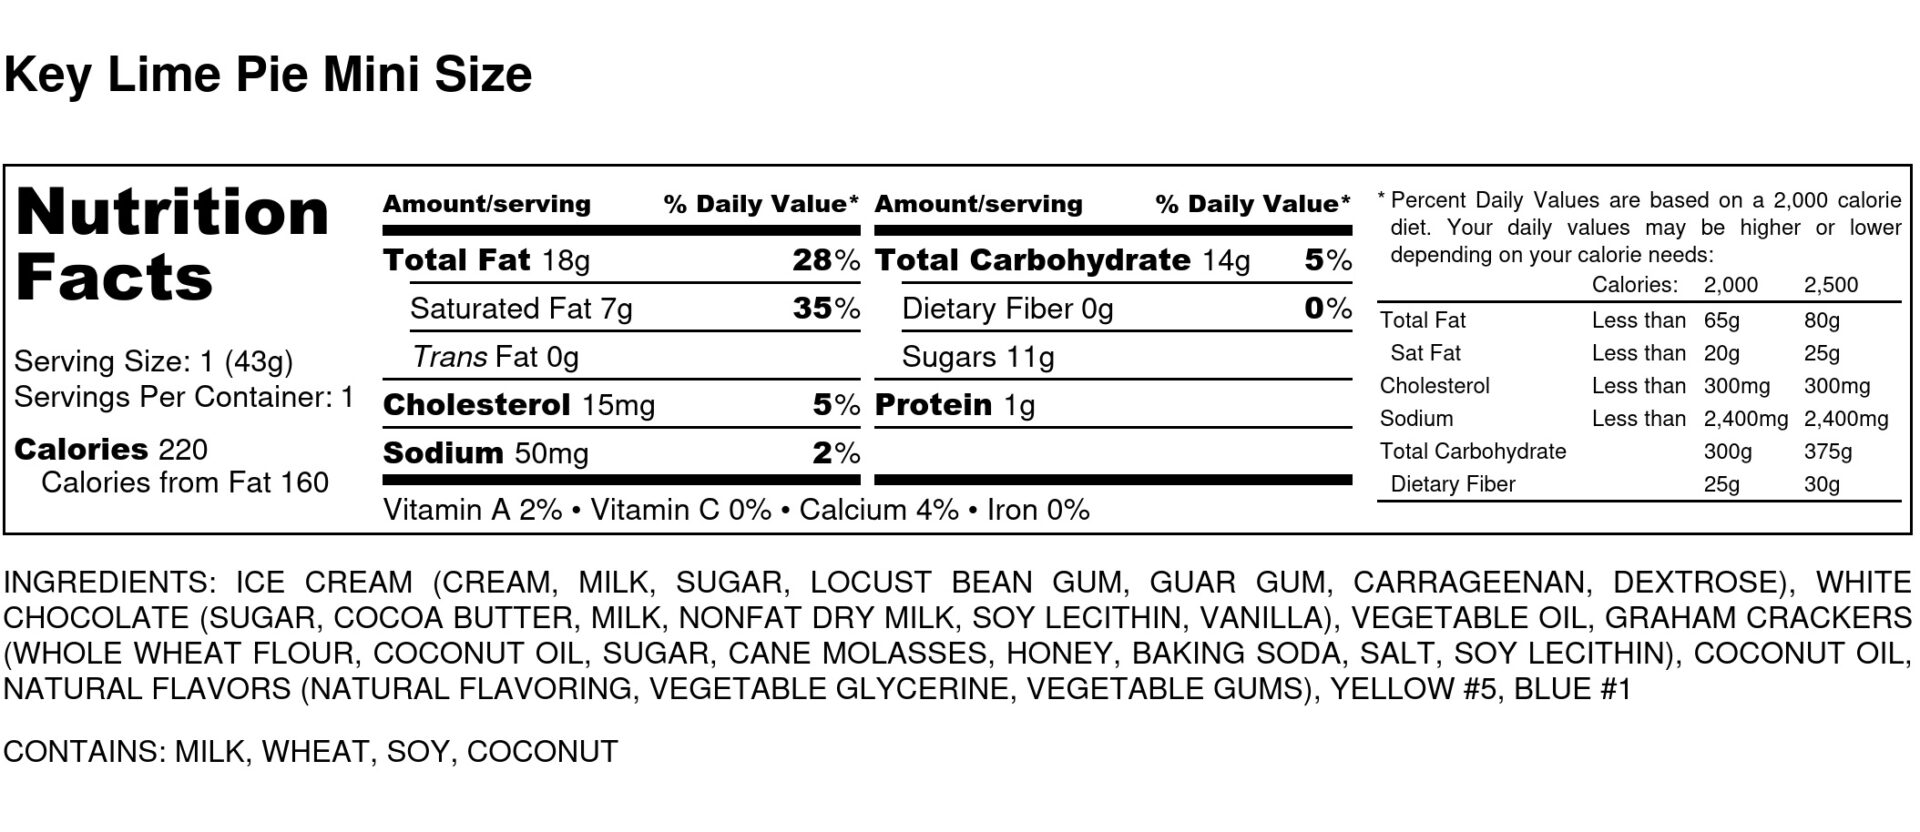 Key Lime Pie Mini Size Nutrition Label scaled